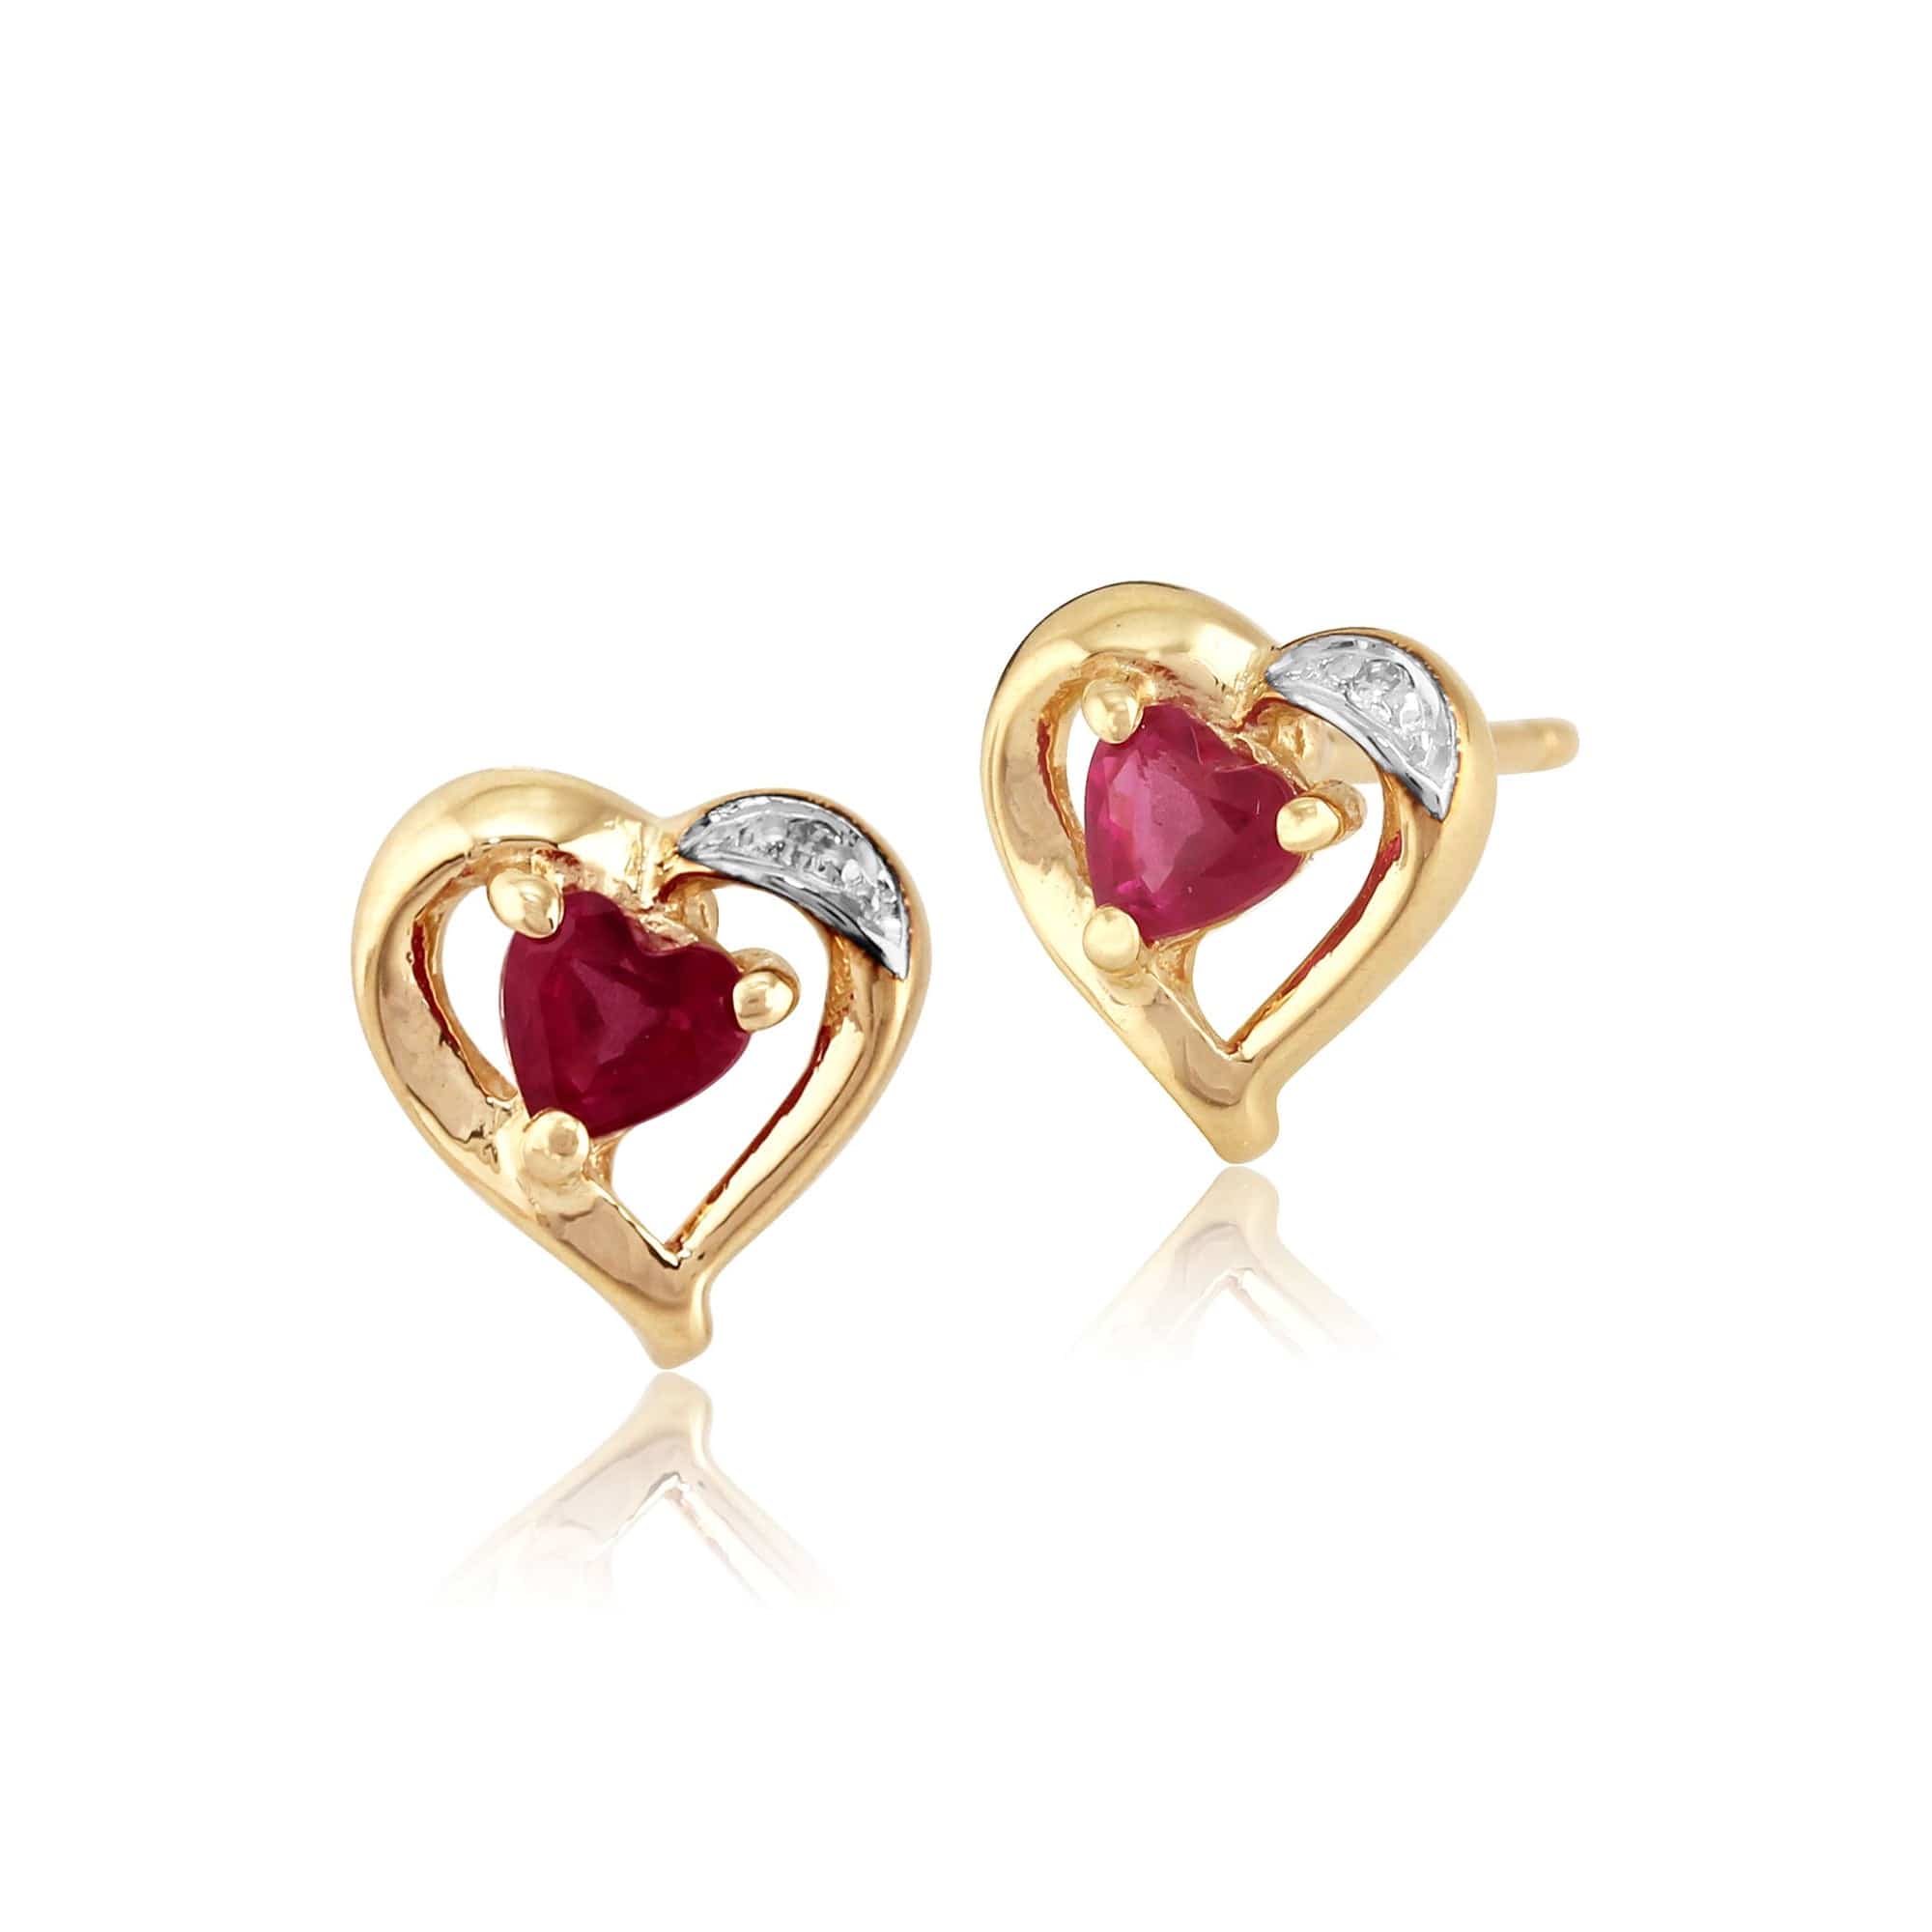 10295 Classic Heart Ruby & Diamond Stud Earrings in 9ct Yellow Gold 1